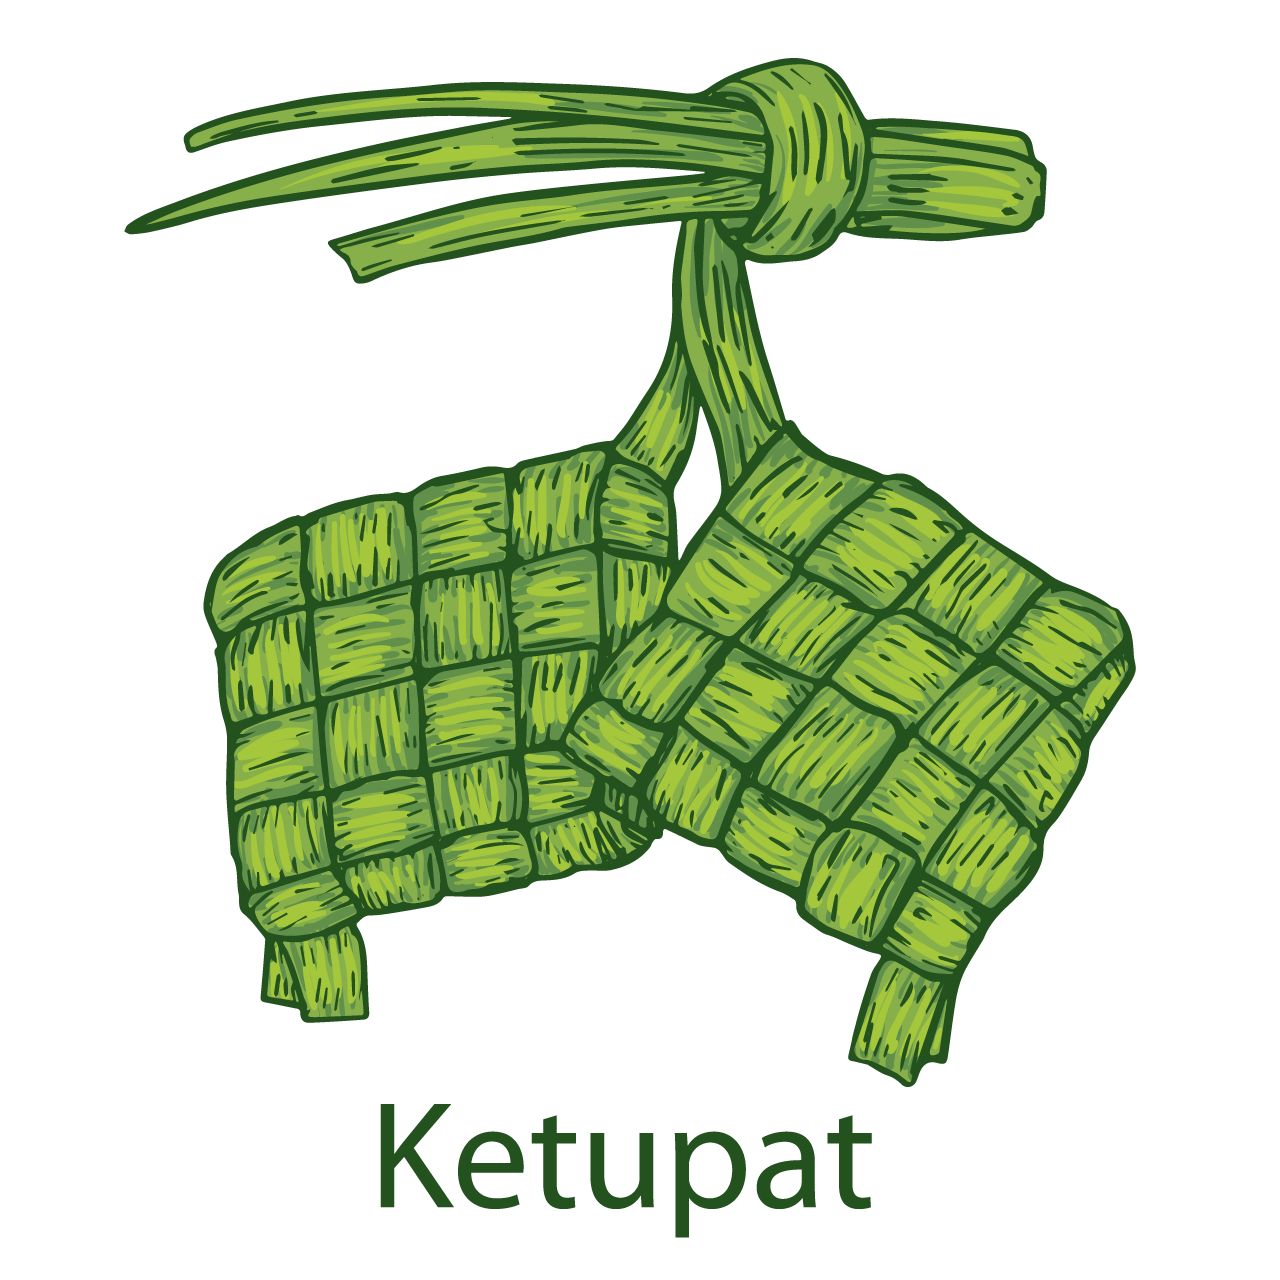 Philippine clipart food ketupat hand drawn cartoon illustration image